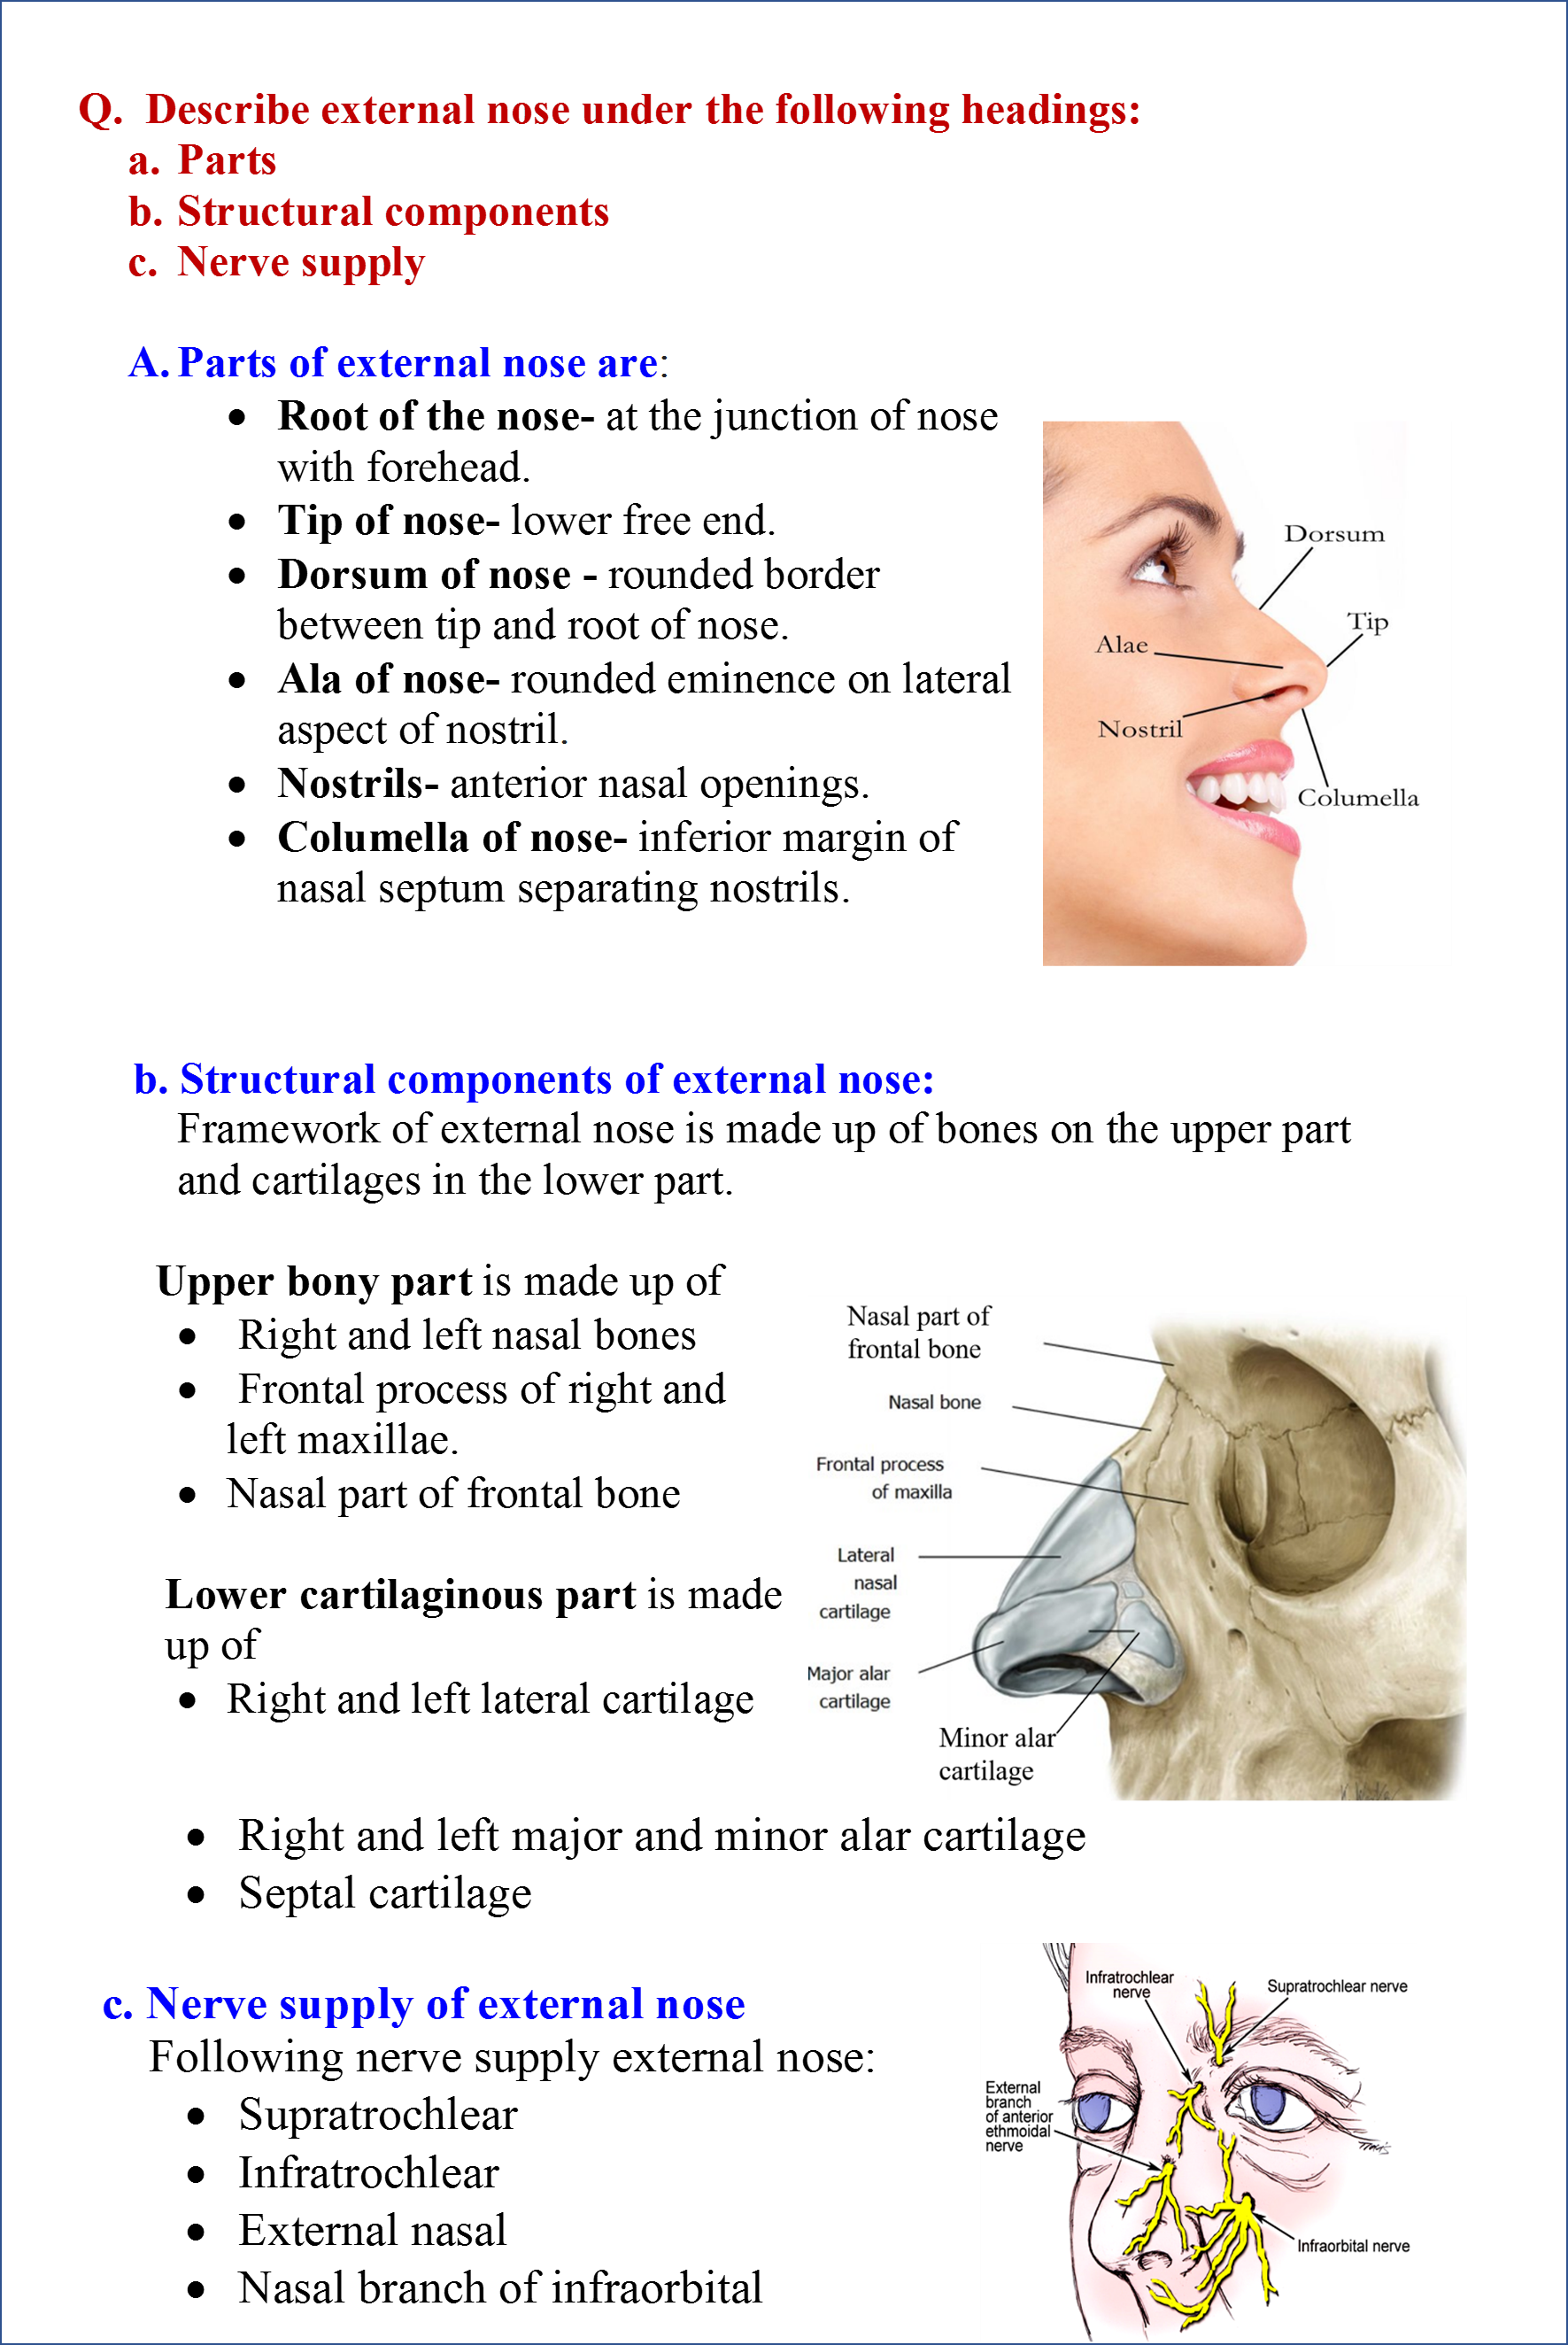 Nasal Surface Anatomy